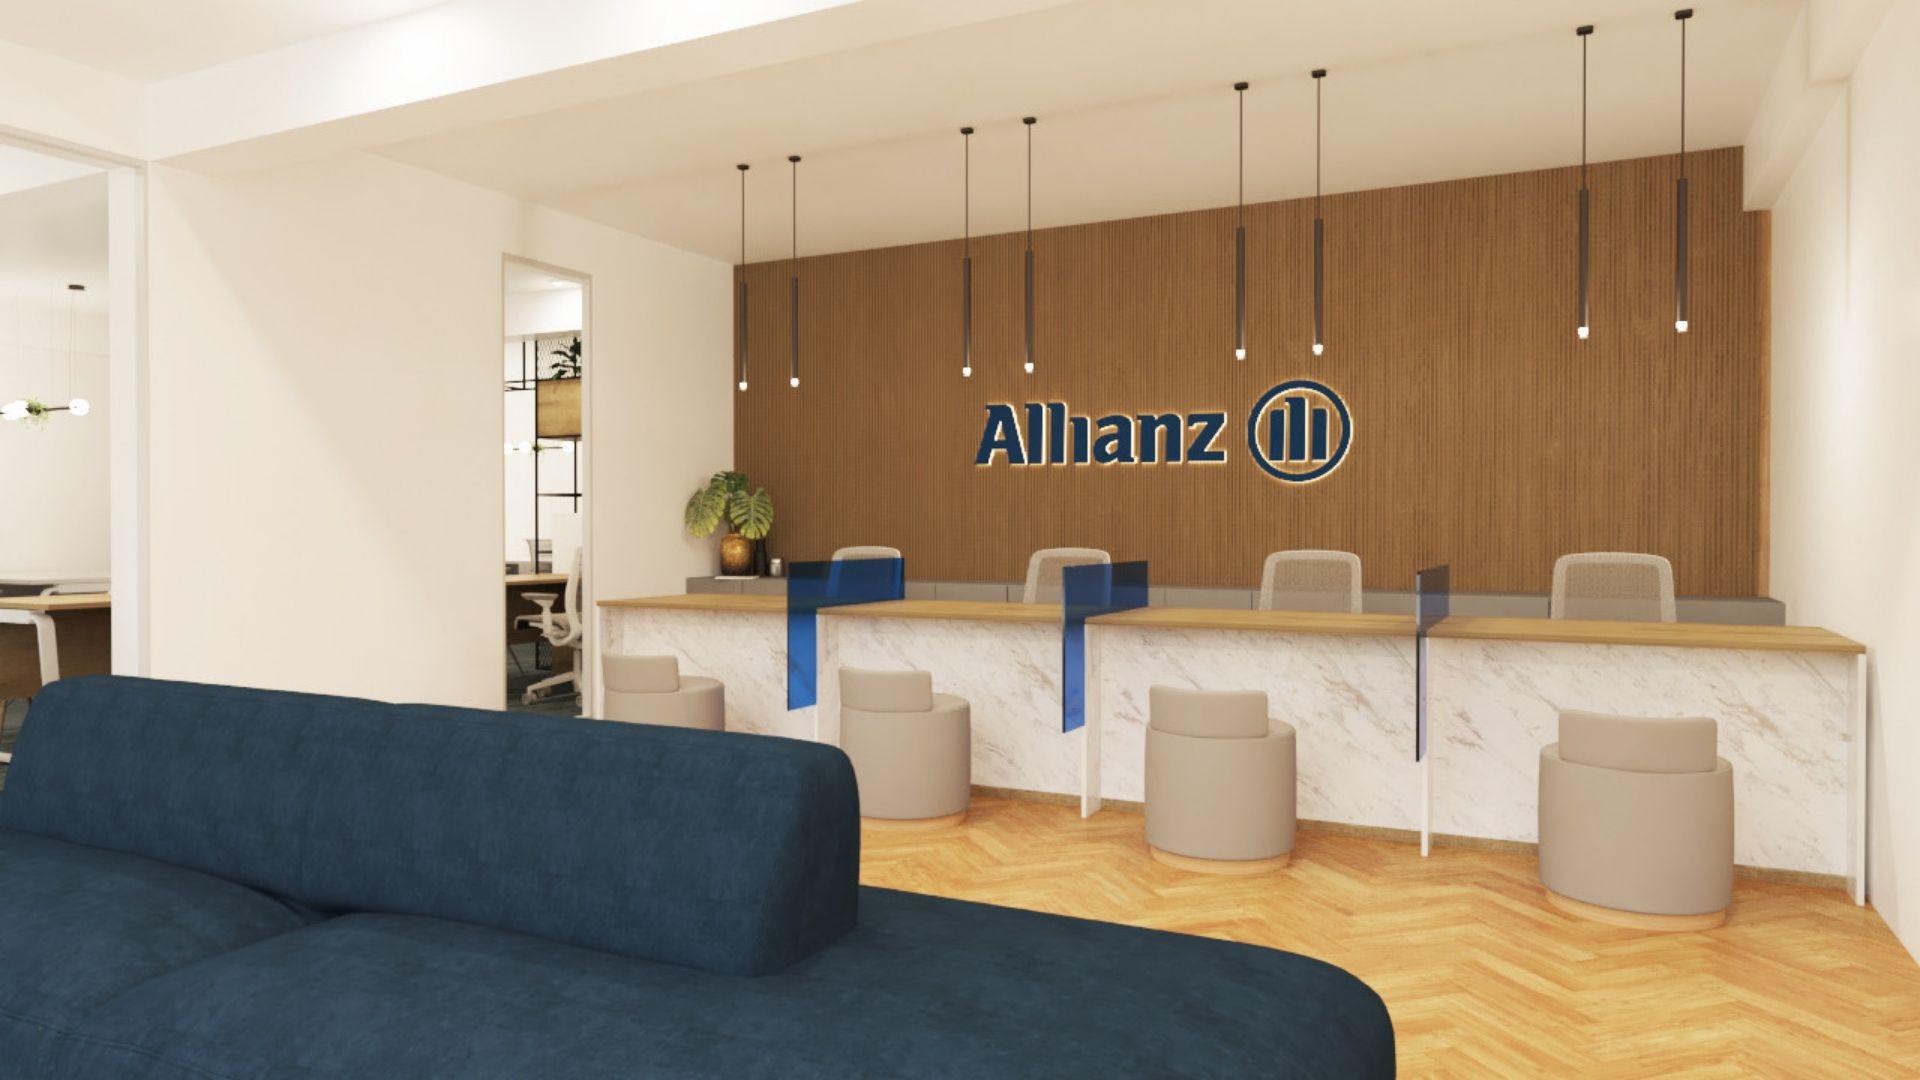 Allianz Office Interior